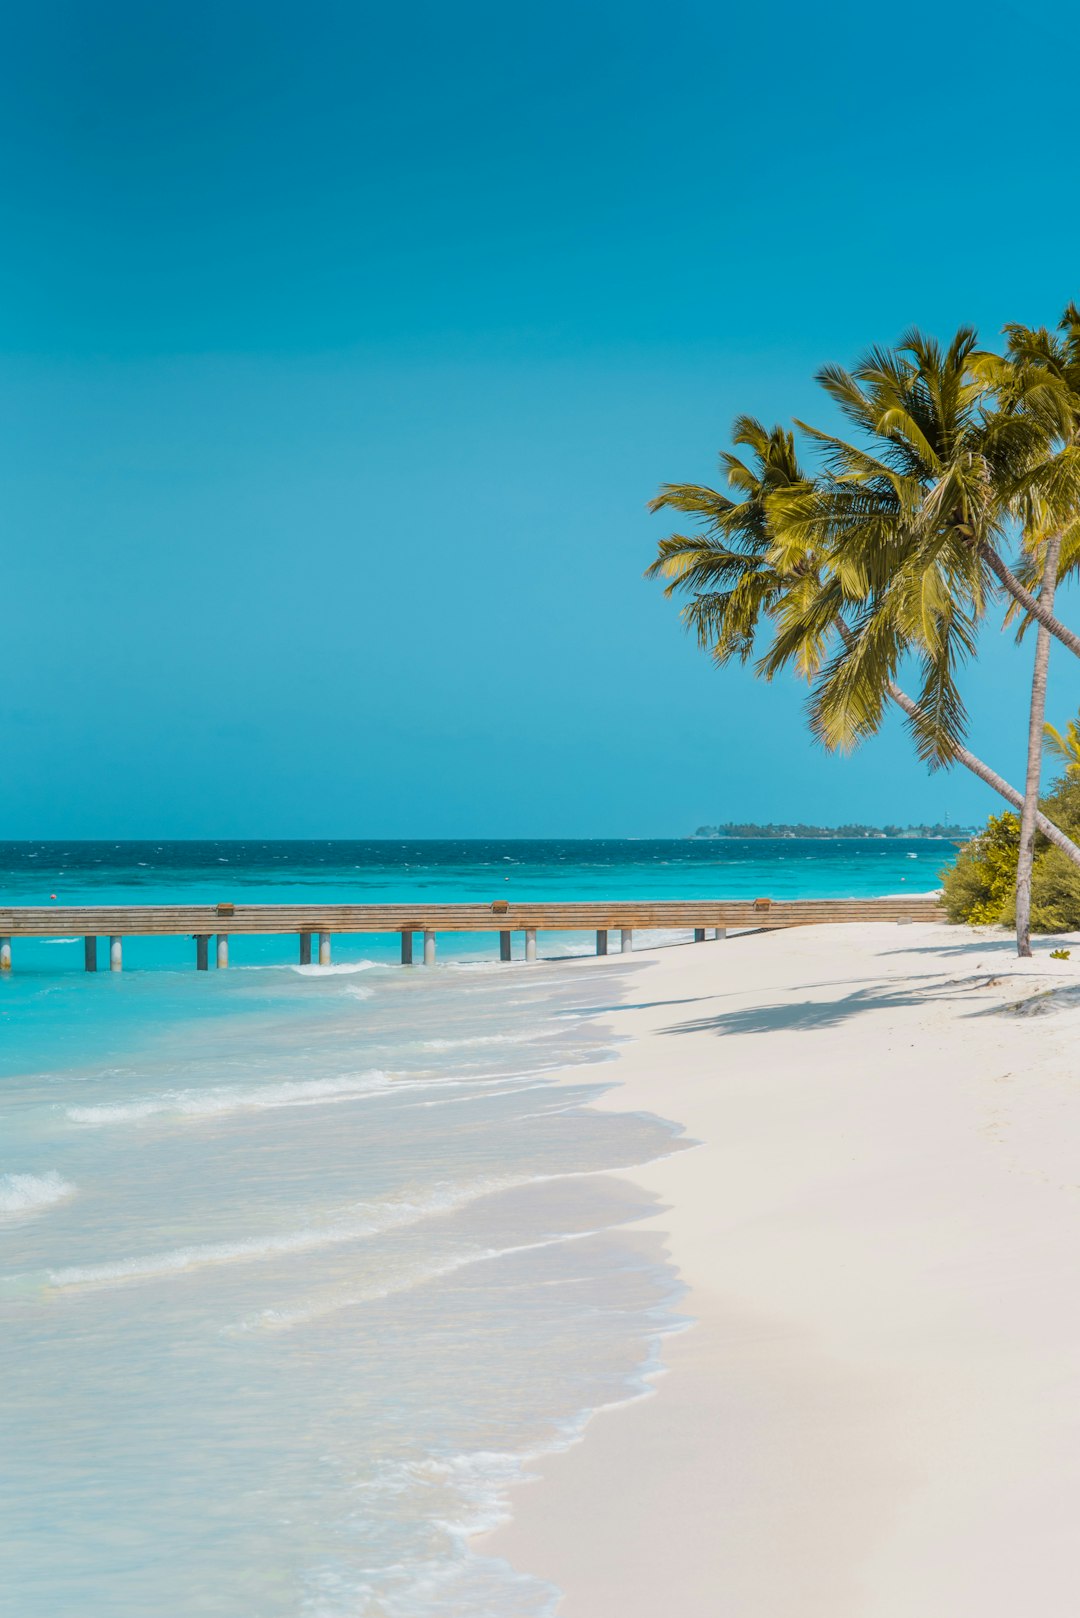 travelers stories about Beach in Reethi Faru Resort, Maldives